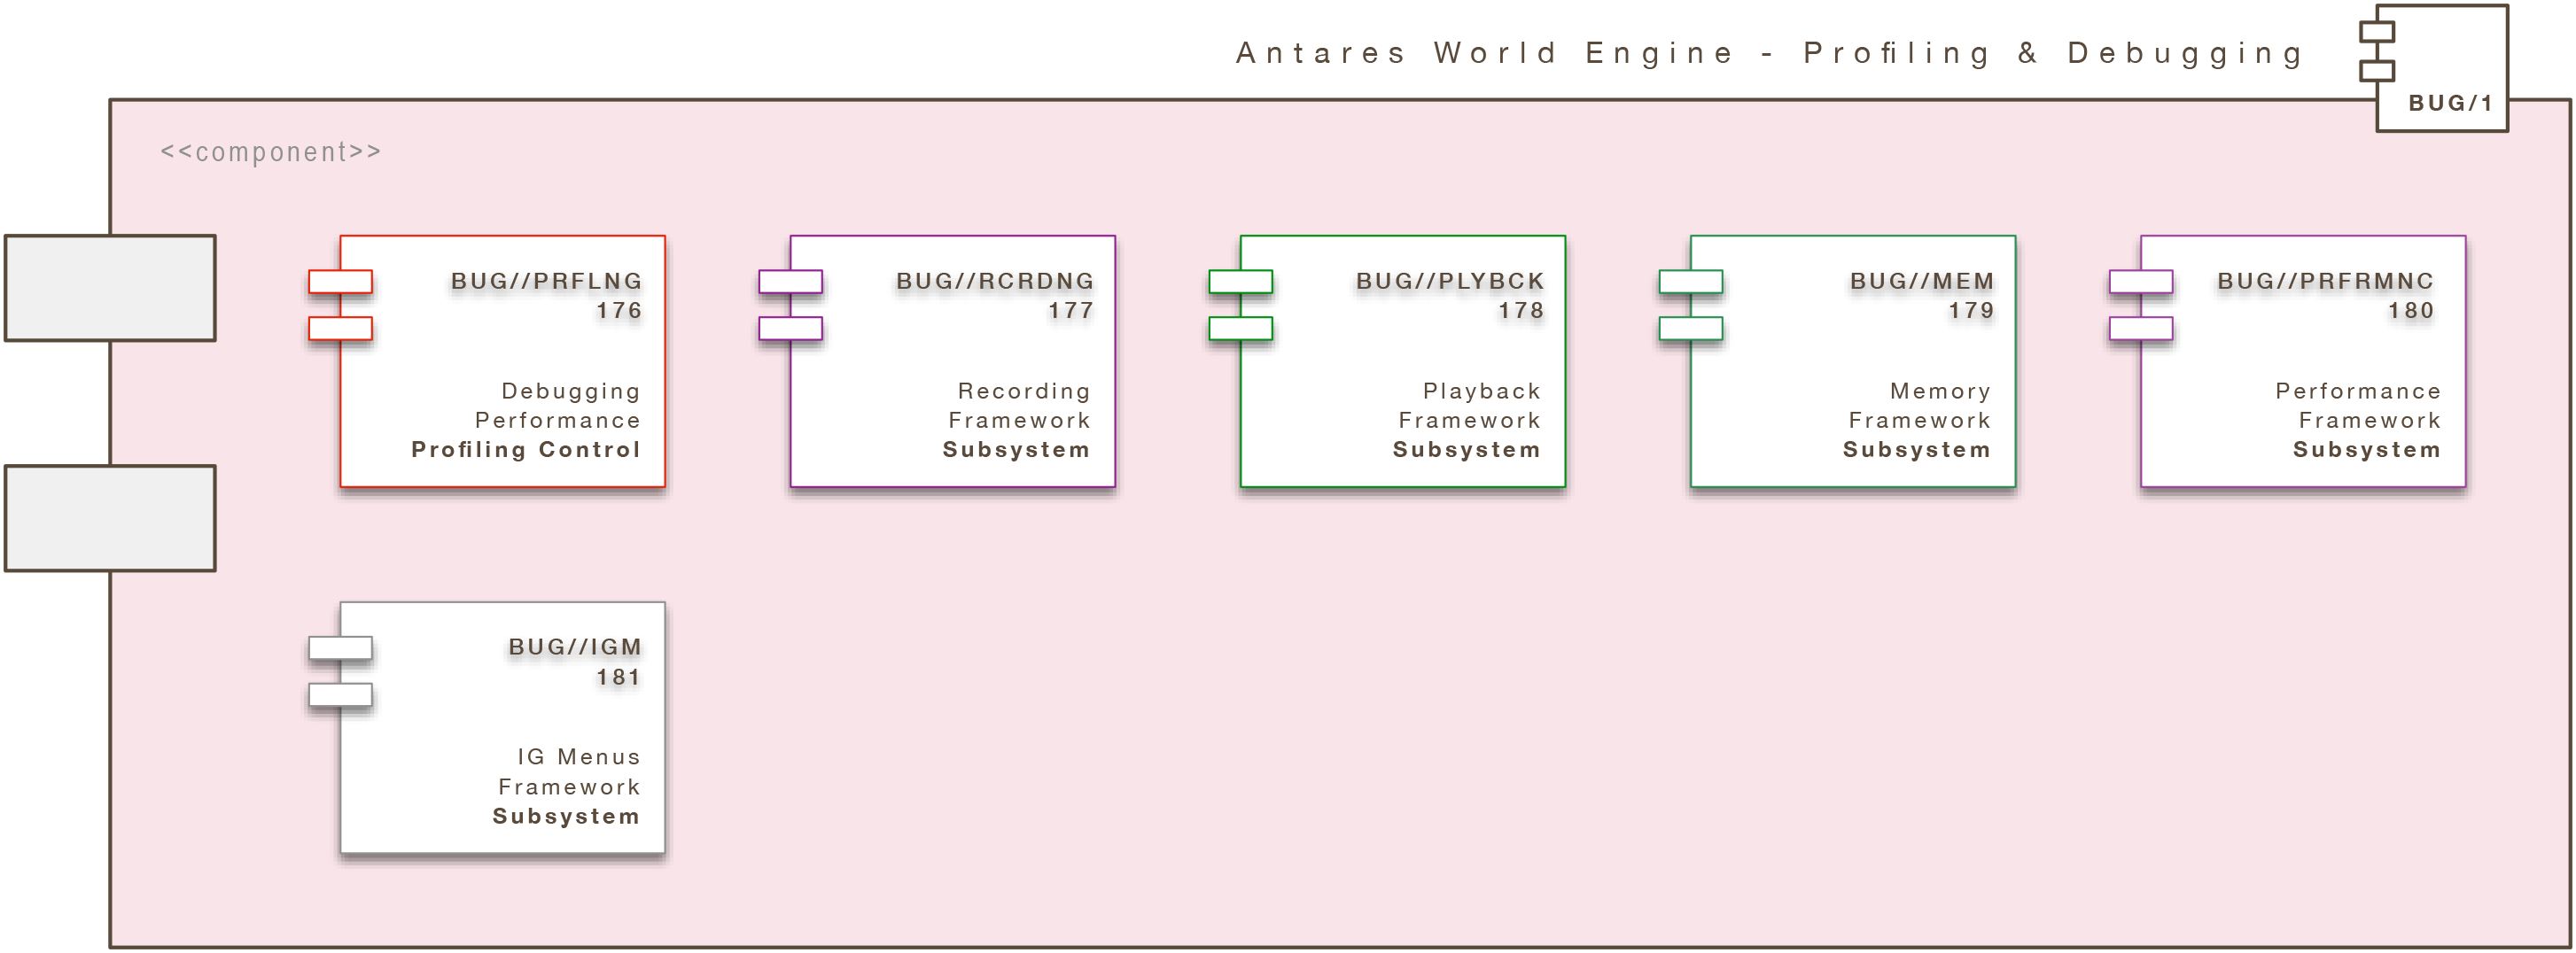 Antares World Engine (Core): Proﬁling & Debugging (AWE/BUG)